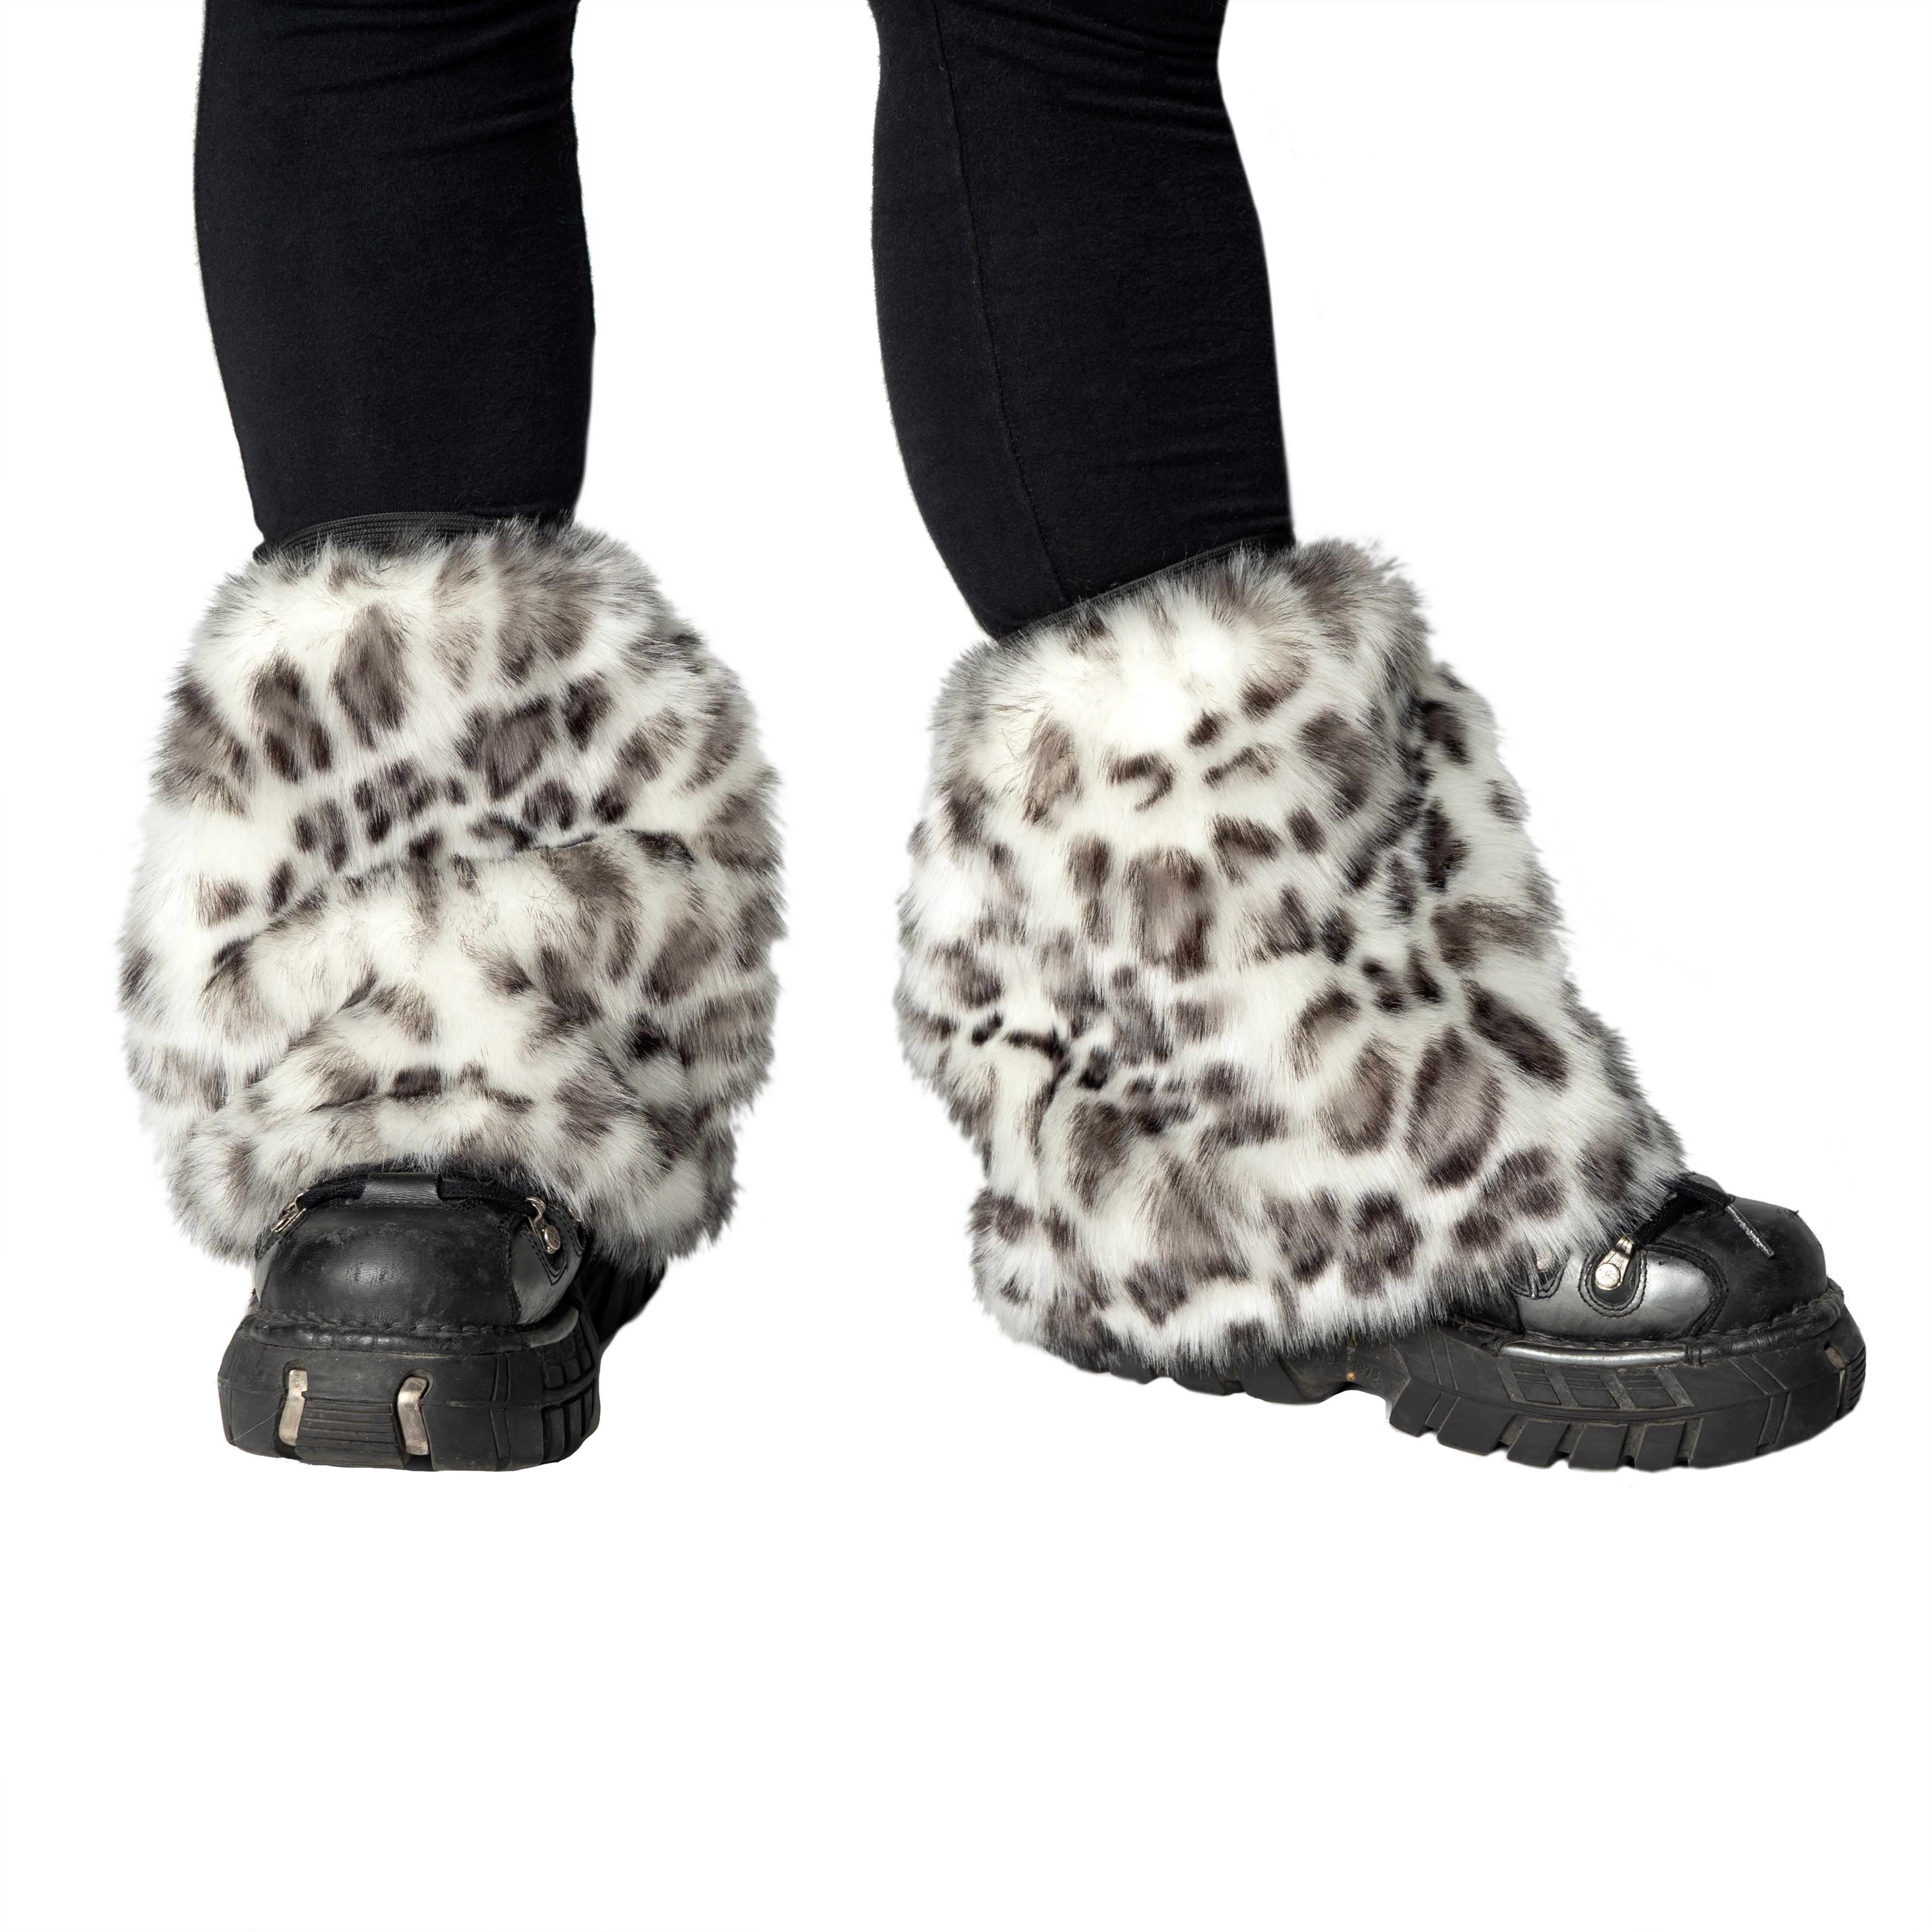 Snow Leopard Pony Puff Leg Warmers - Pawstar Pawstar Pony Puffs cosplay, costume, furry, Legs, ship-15